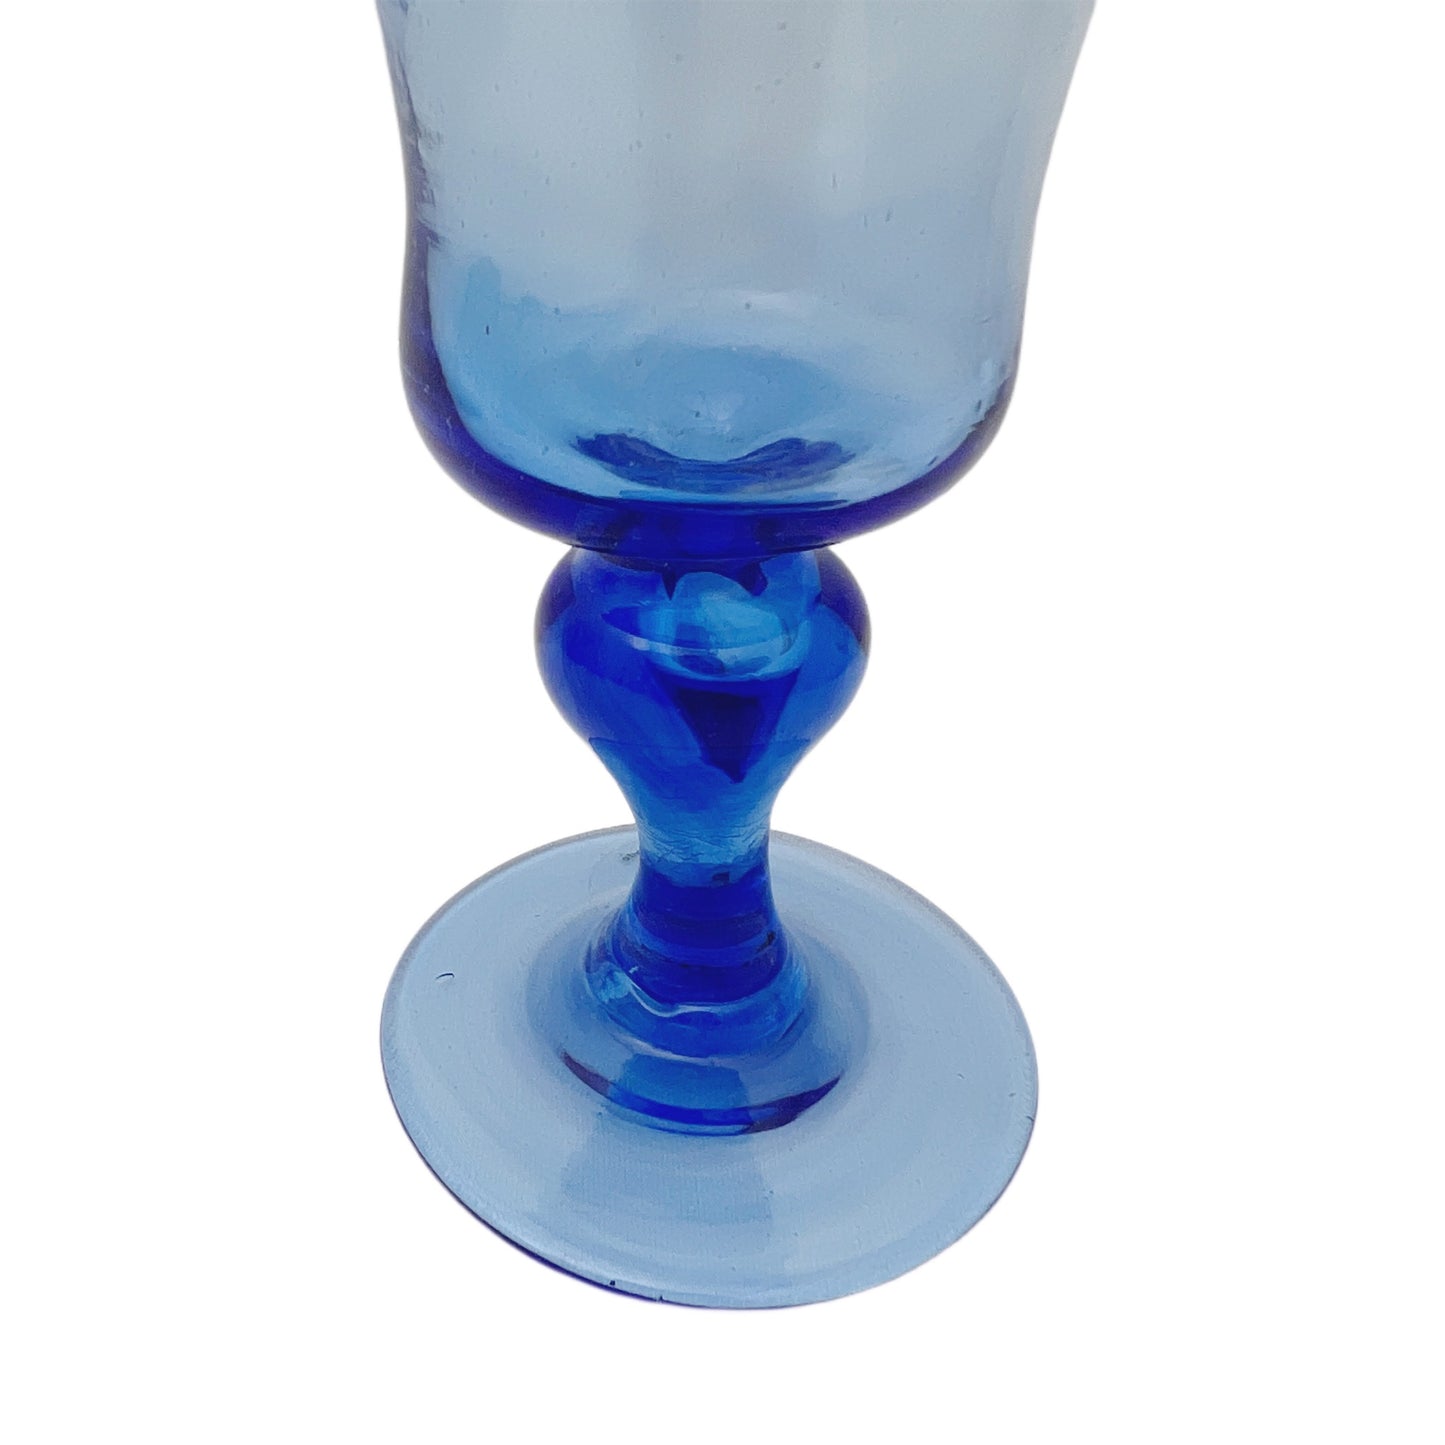 【La Soufflerie】ワイングラス White Wine Glass Light Blue